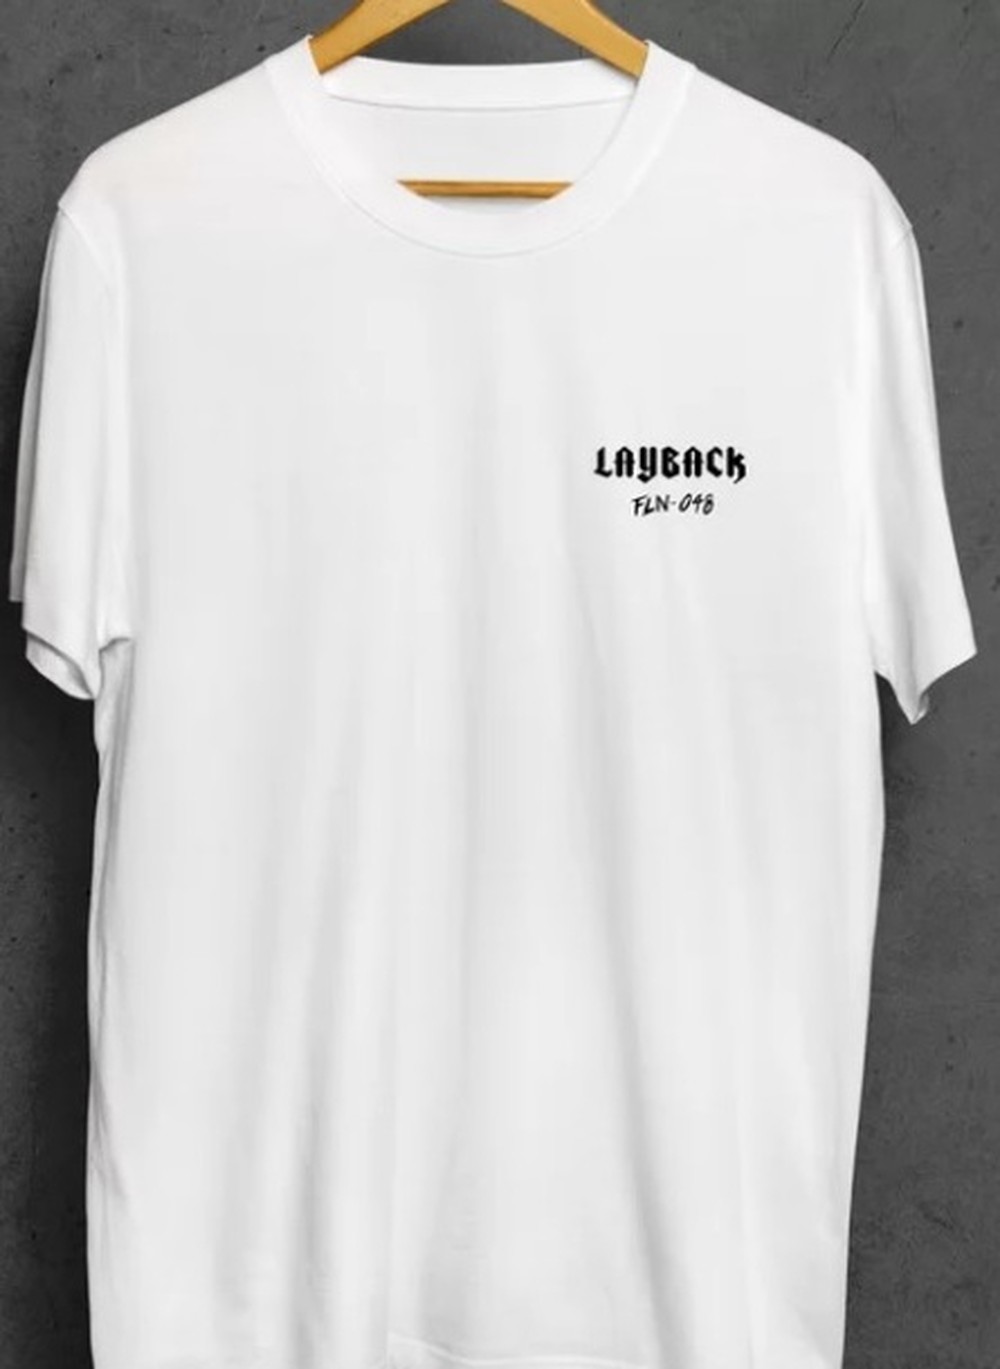 Camiseta Layback Floripa 048 Branca